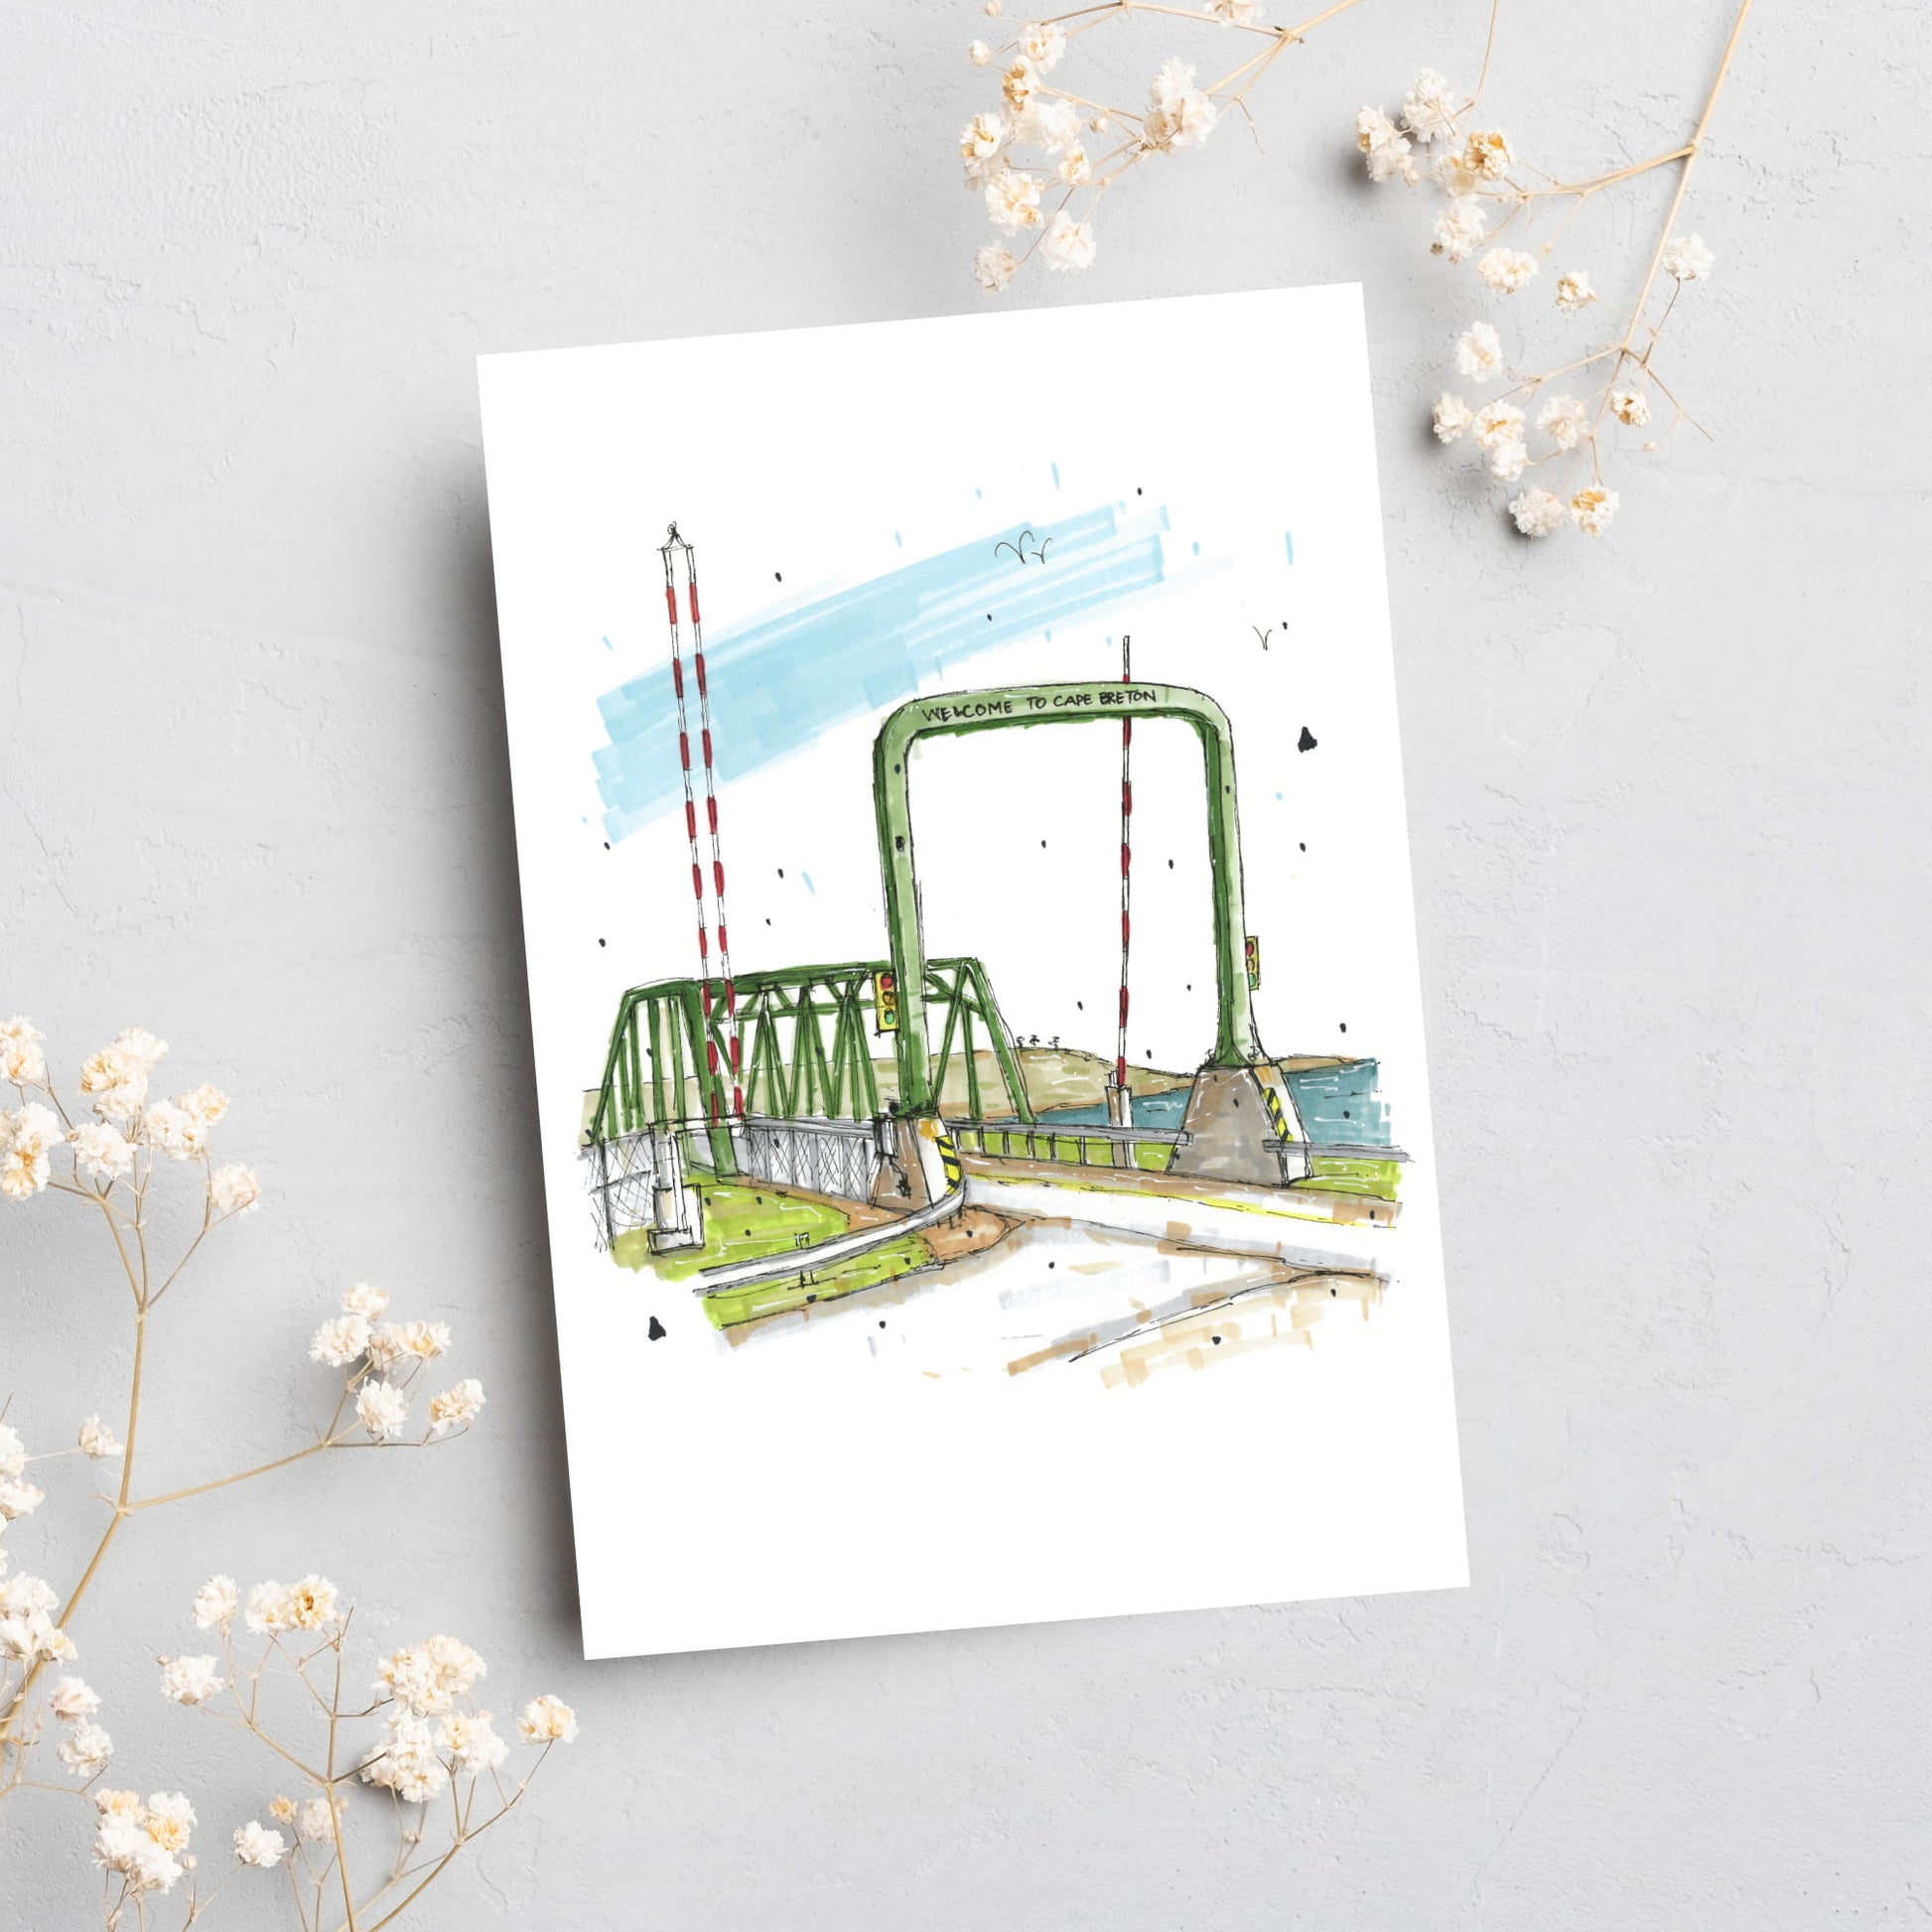 DTS0107 - Canso Causeway Cape Breton Island, Nova Scotia, Urban Sketch, Greeting Card with Envelope, Downtown Sketcher, Wynand van Niekerk